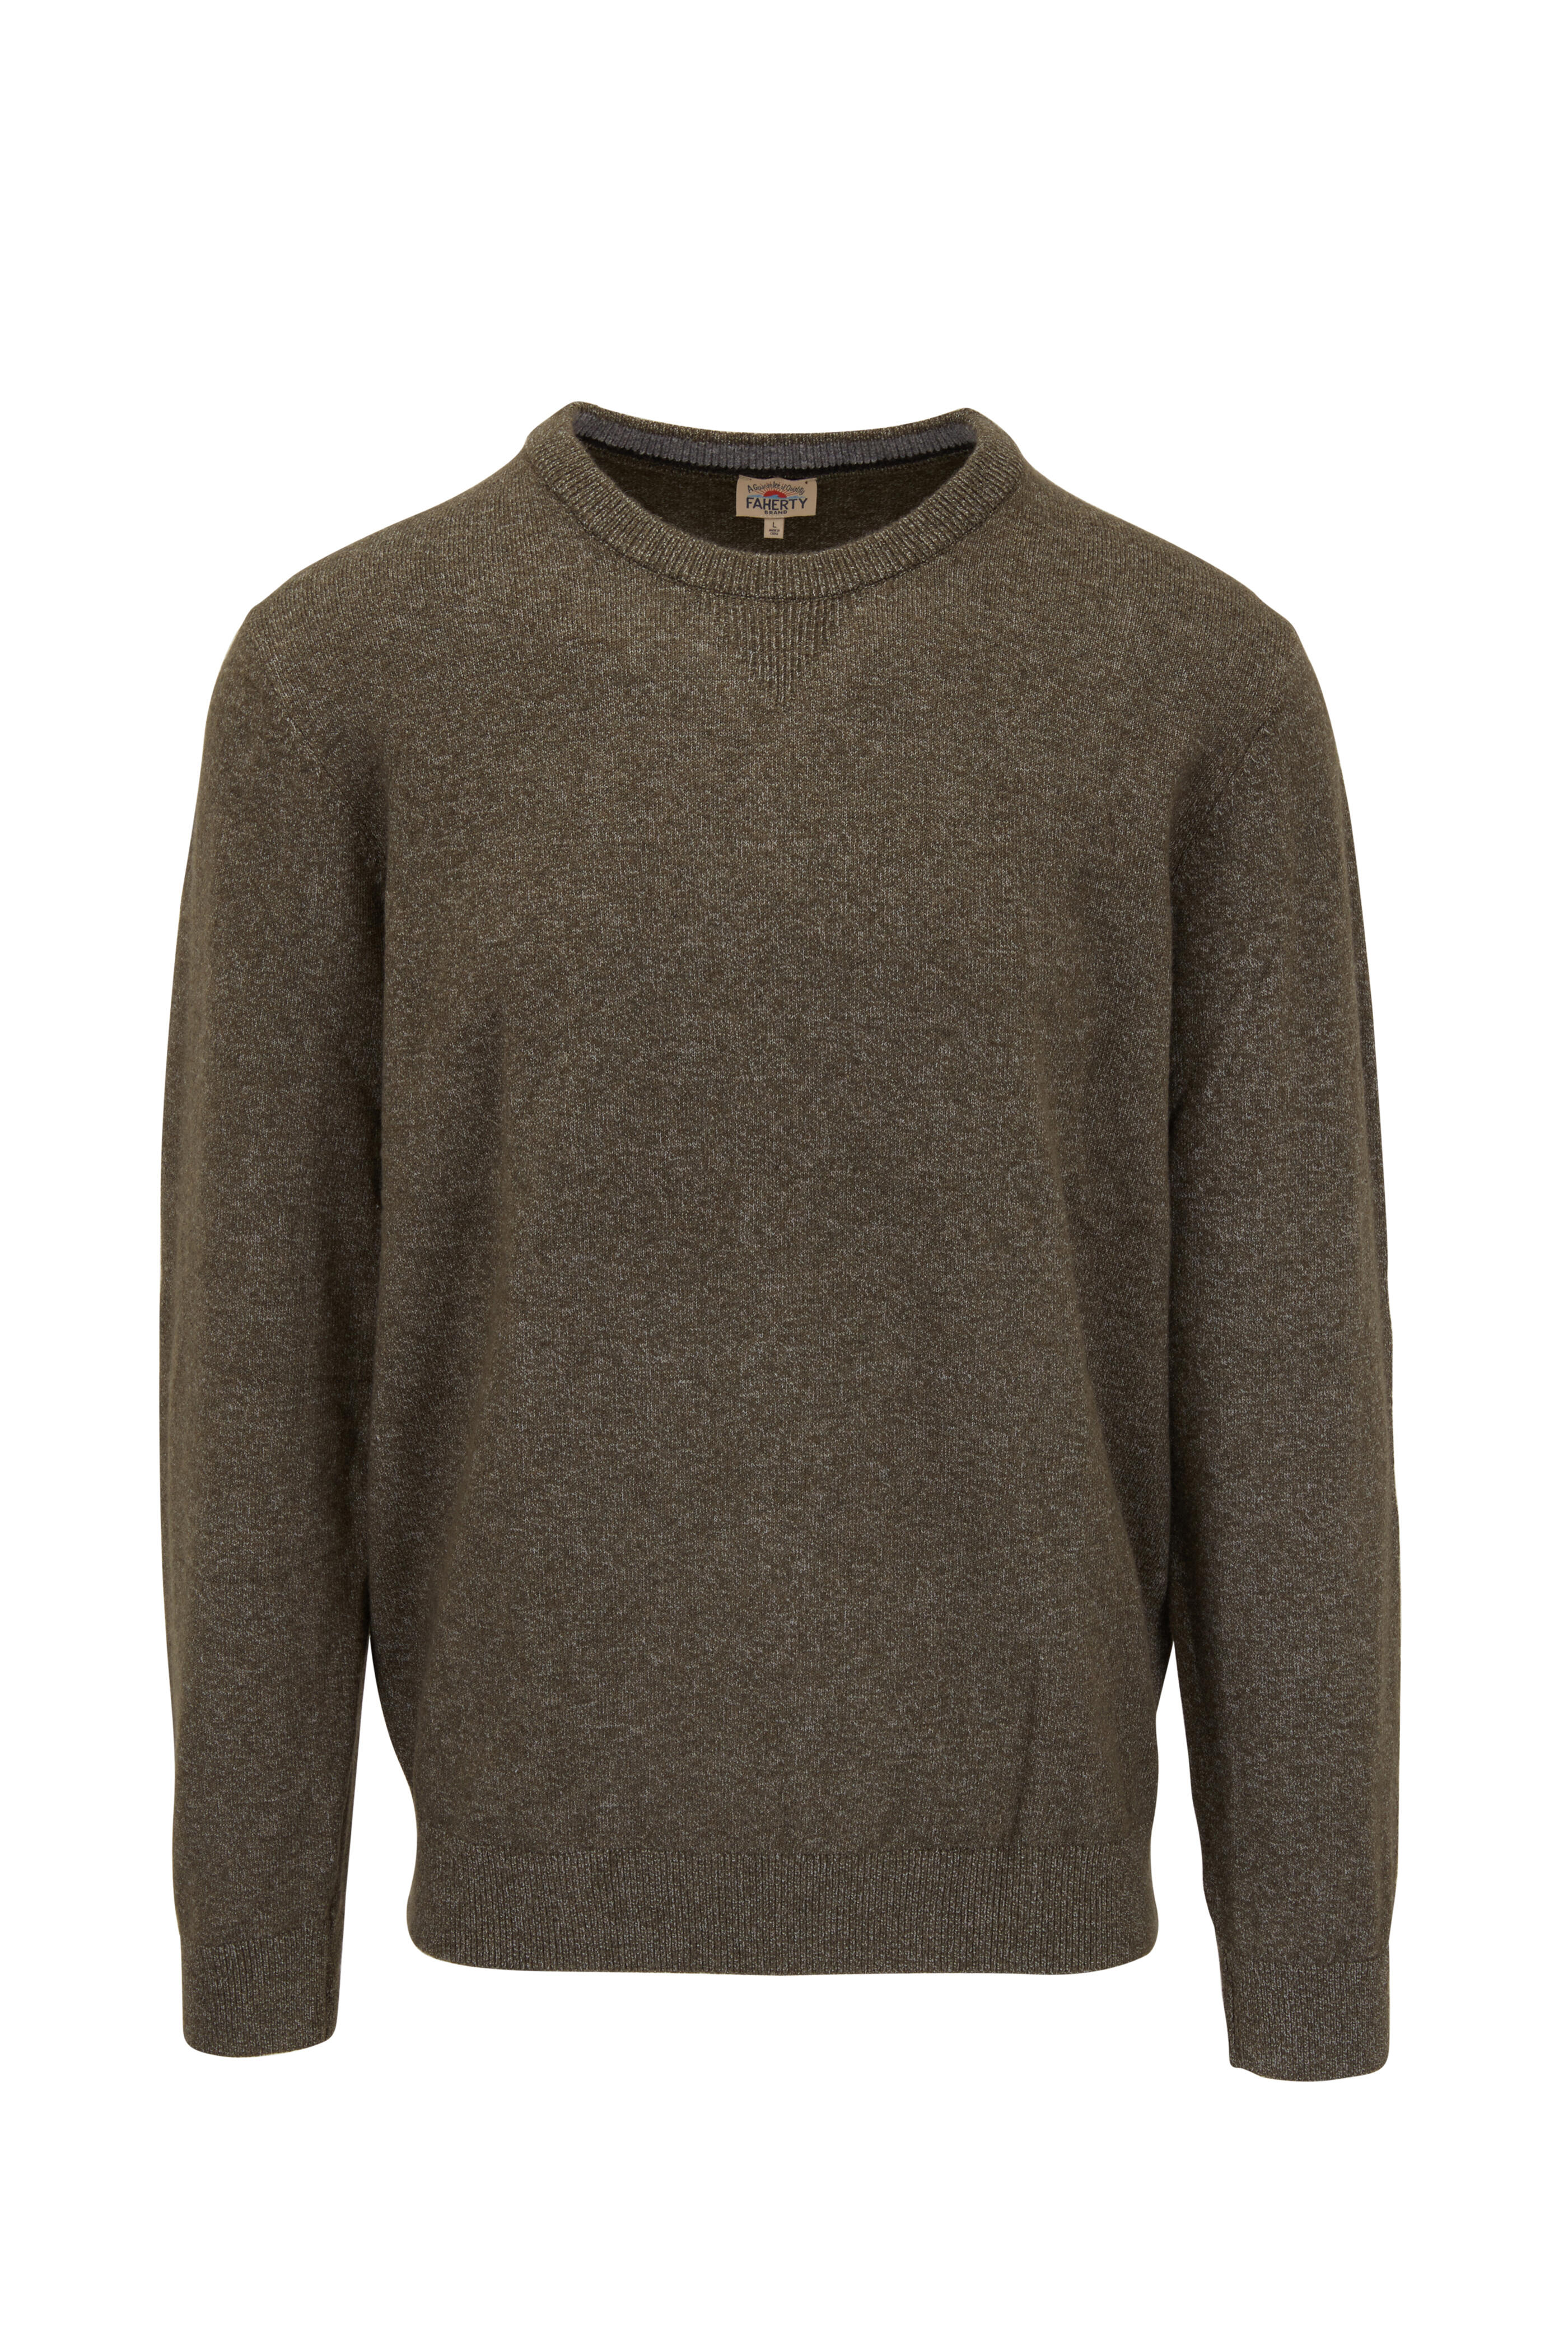 Faherty Brand - Jackson Hole Heathered Olive Crewneck Sweater